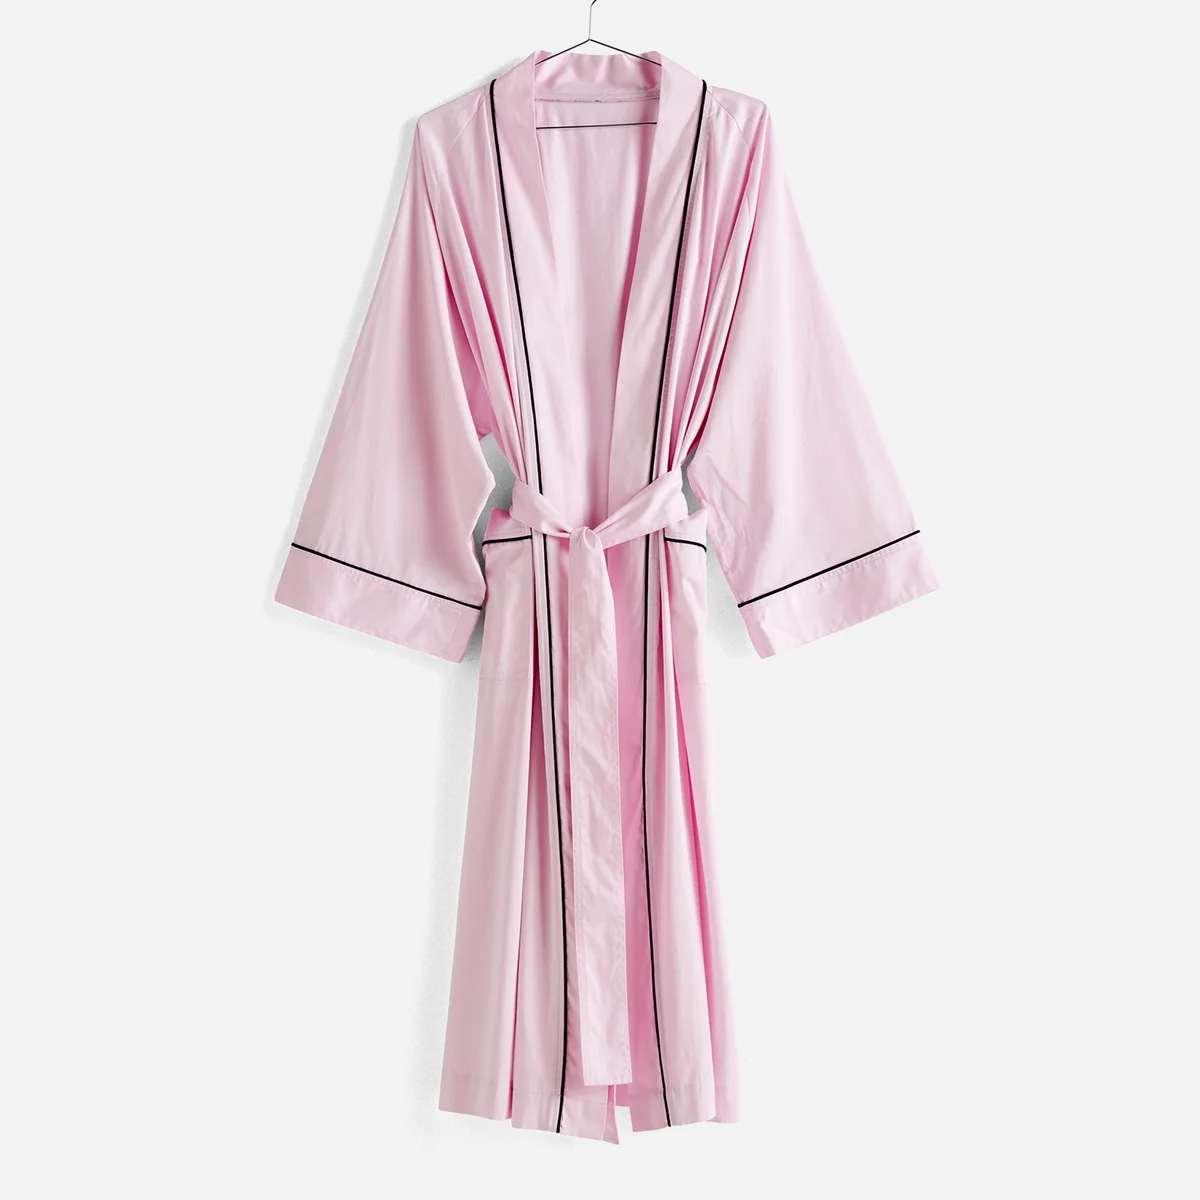 HAY Outline Robe - Soft Pink Image 1